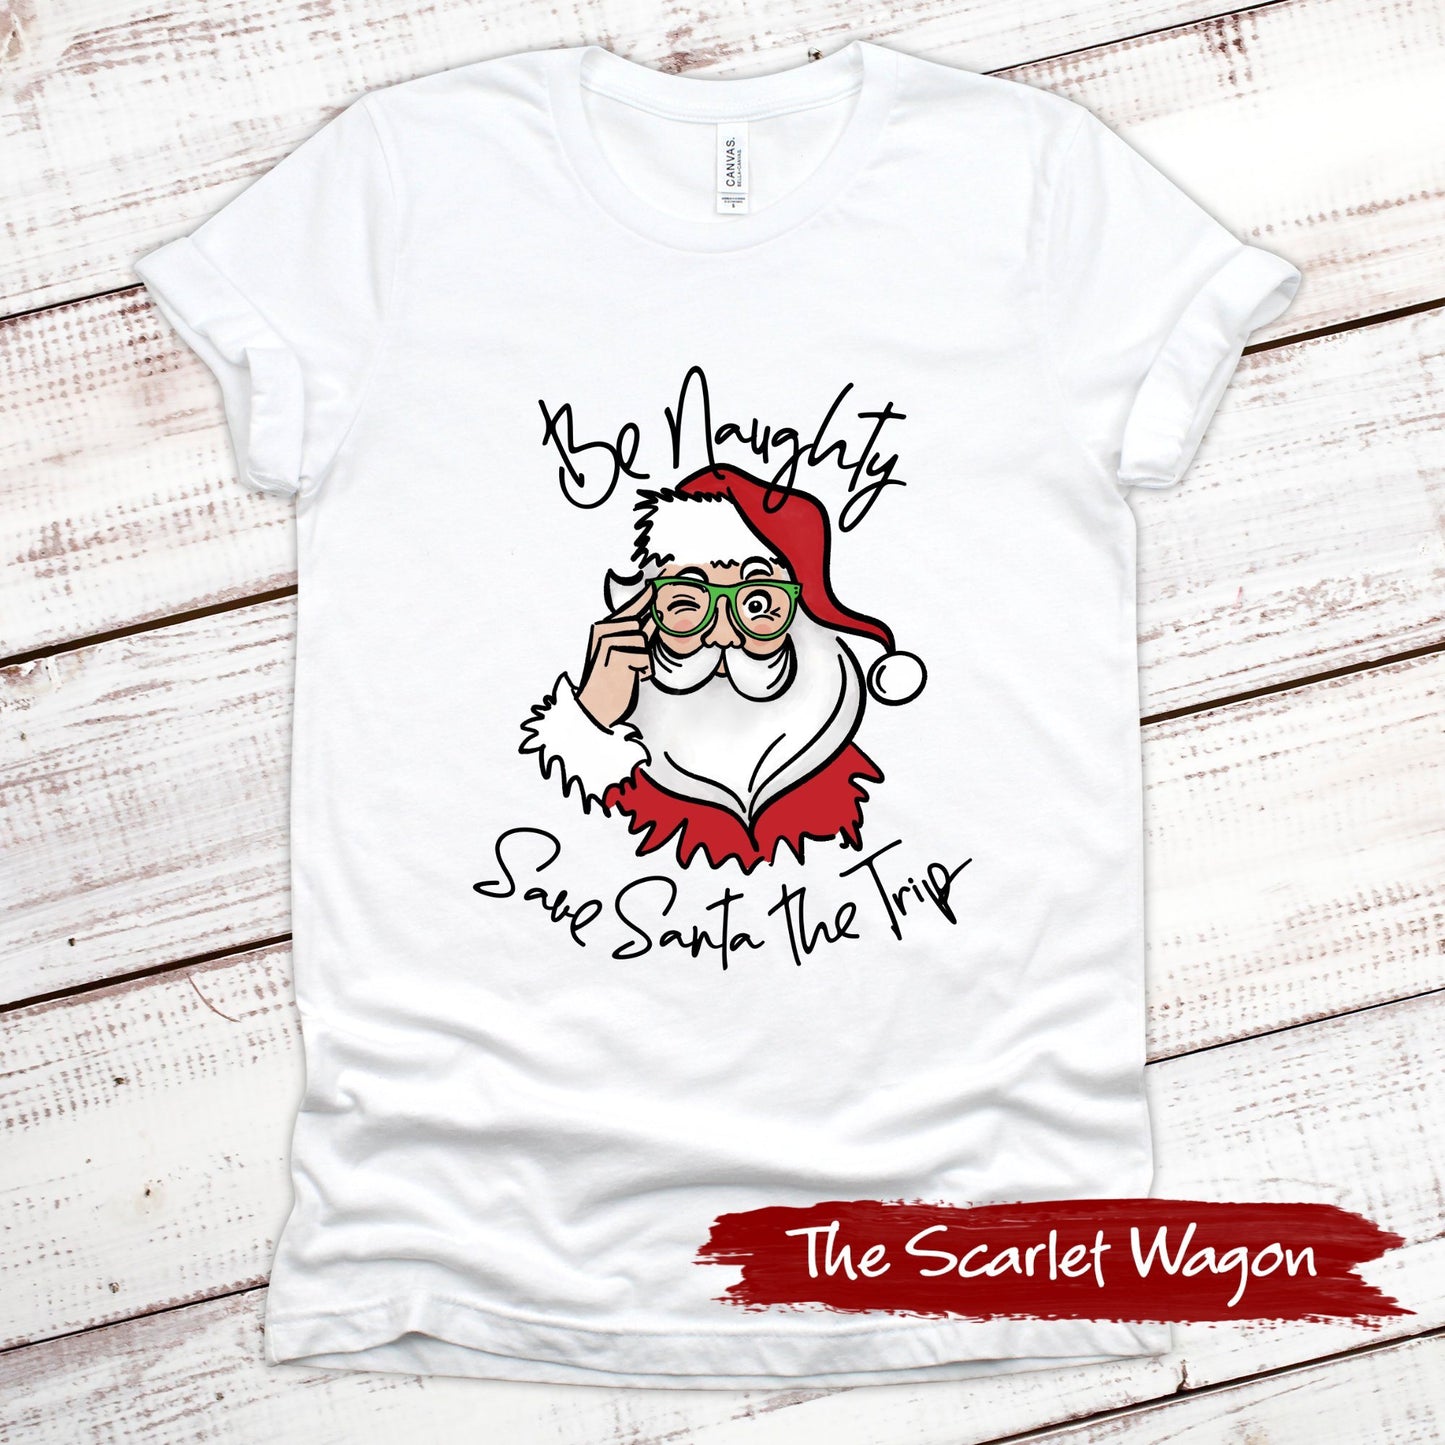 Be Naughty Save Santa the Trip Christmas Shirt Scarlet Wagon White XS 